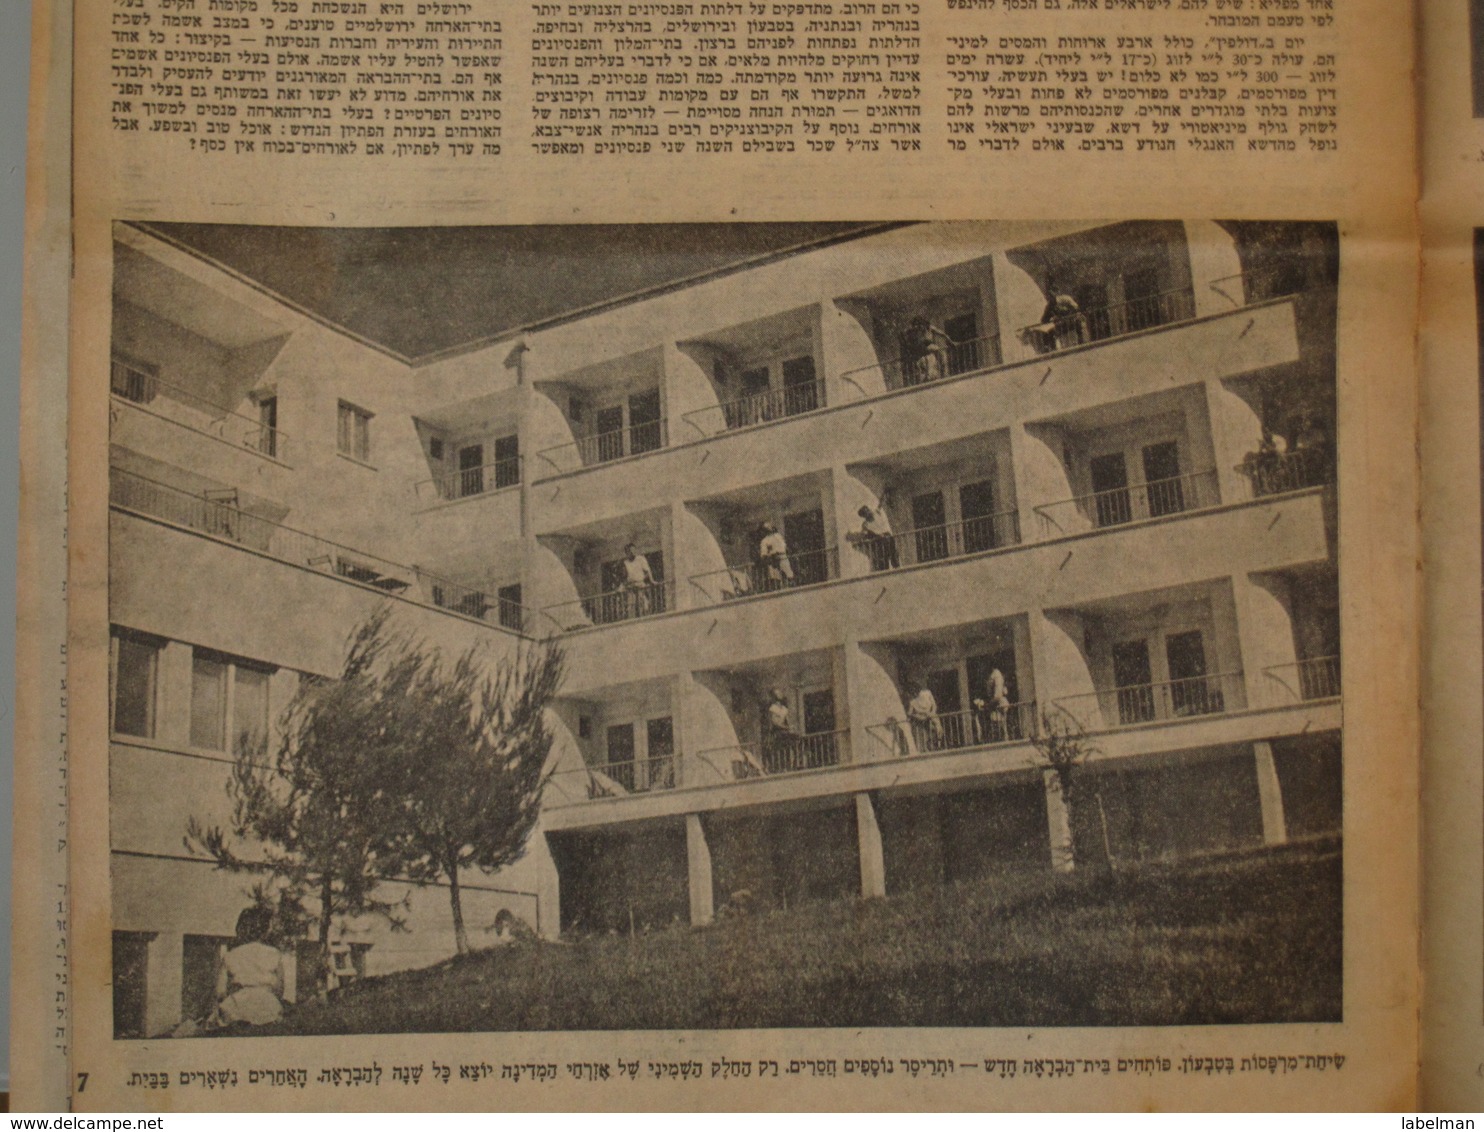 ISRAEL PALESTINE HOTEL GUEST REST HOUSE TELTSCHT MEGIDO HAIFA KUPAT HOLIM DAVAR HASHAVUA 1954 NEWSPAPER ADVERTISING - Advertising